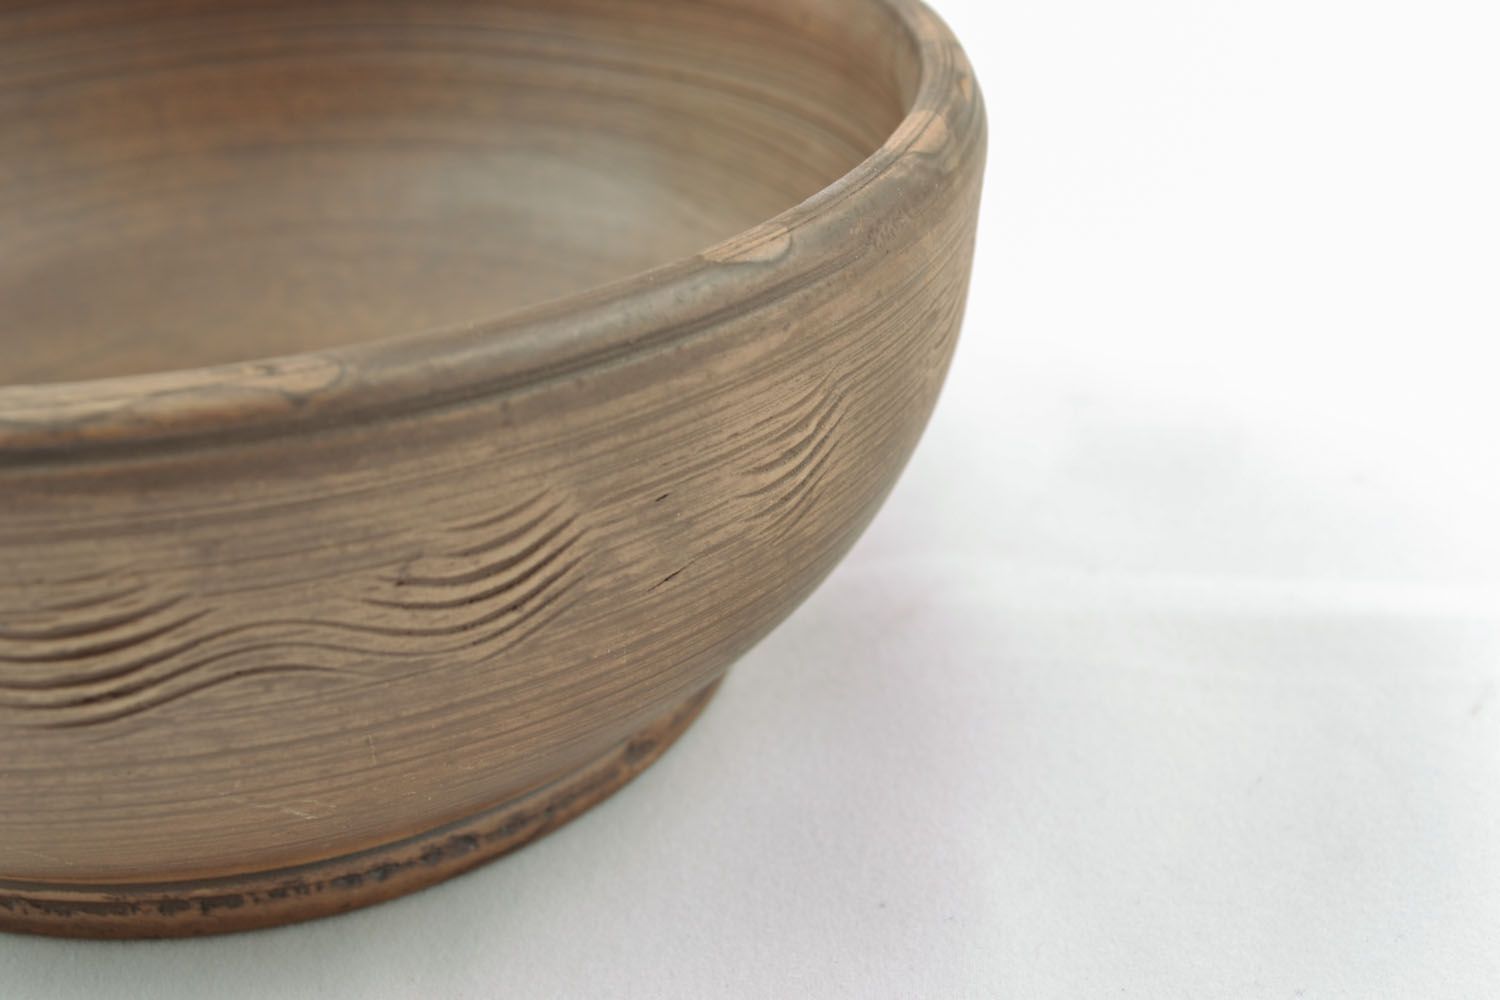 5,5 7 oz brown ceramic serving handmade snack bowl 0,77 lb photo 2